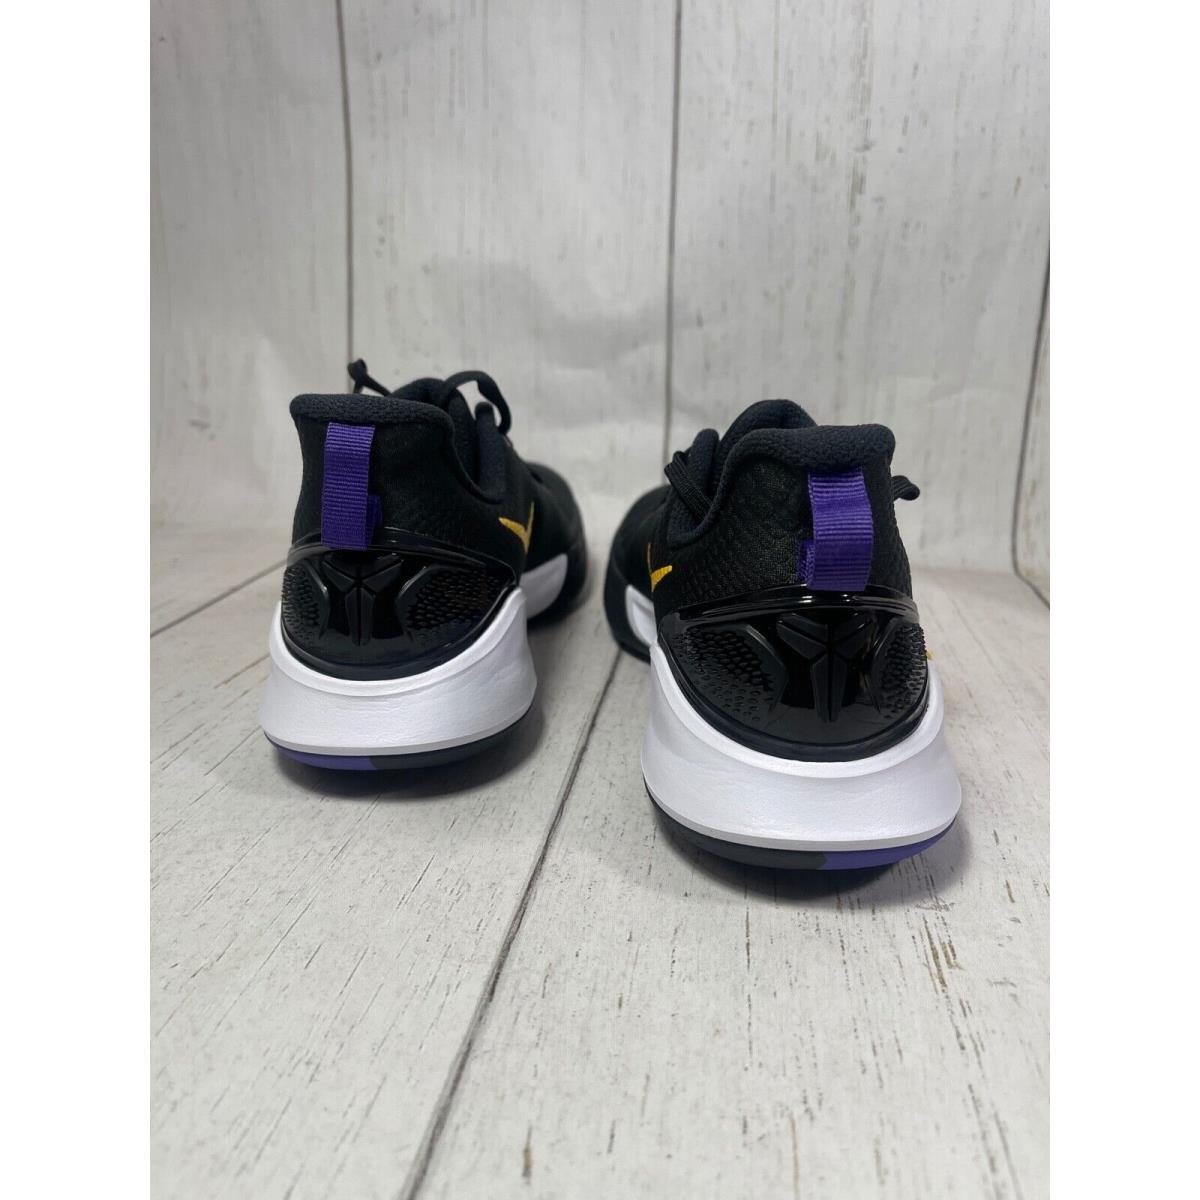 Nike Mamba Focus Kobe Bryant Shoe Black Yellow Purple AJ5899-005 Lakers |  883212786807 - Nike shoes Mamba Focus - Black | SporTipTop